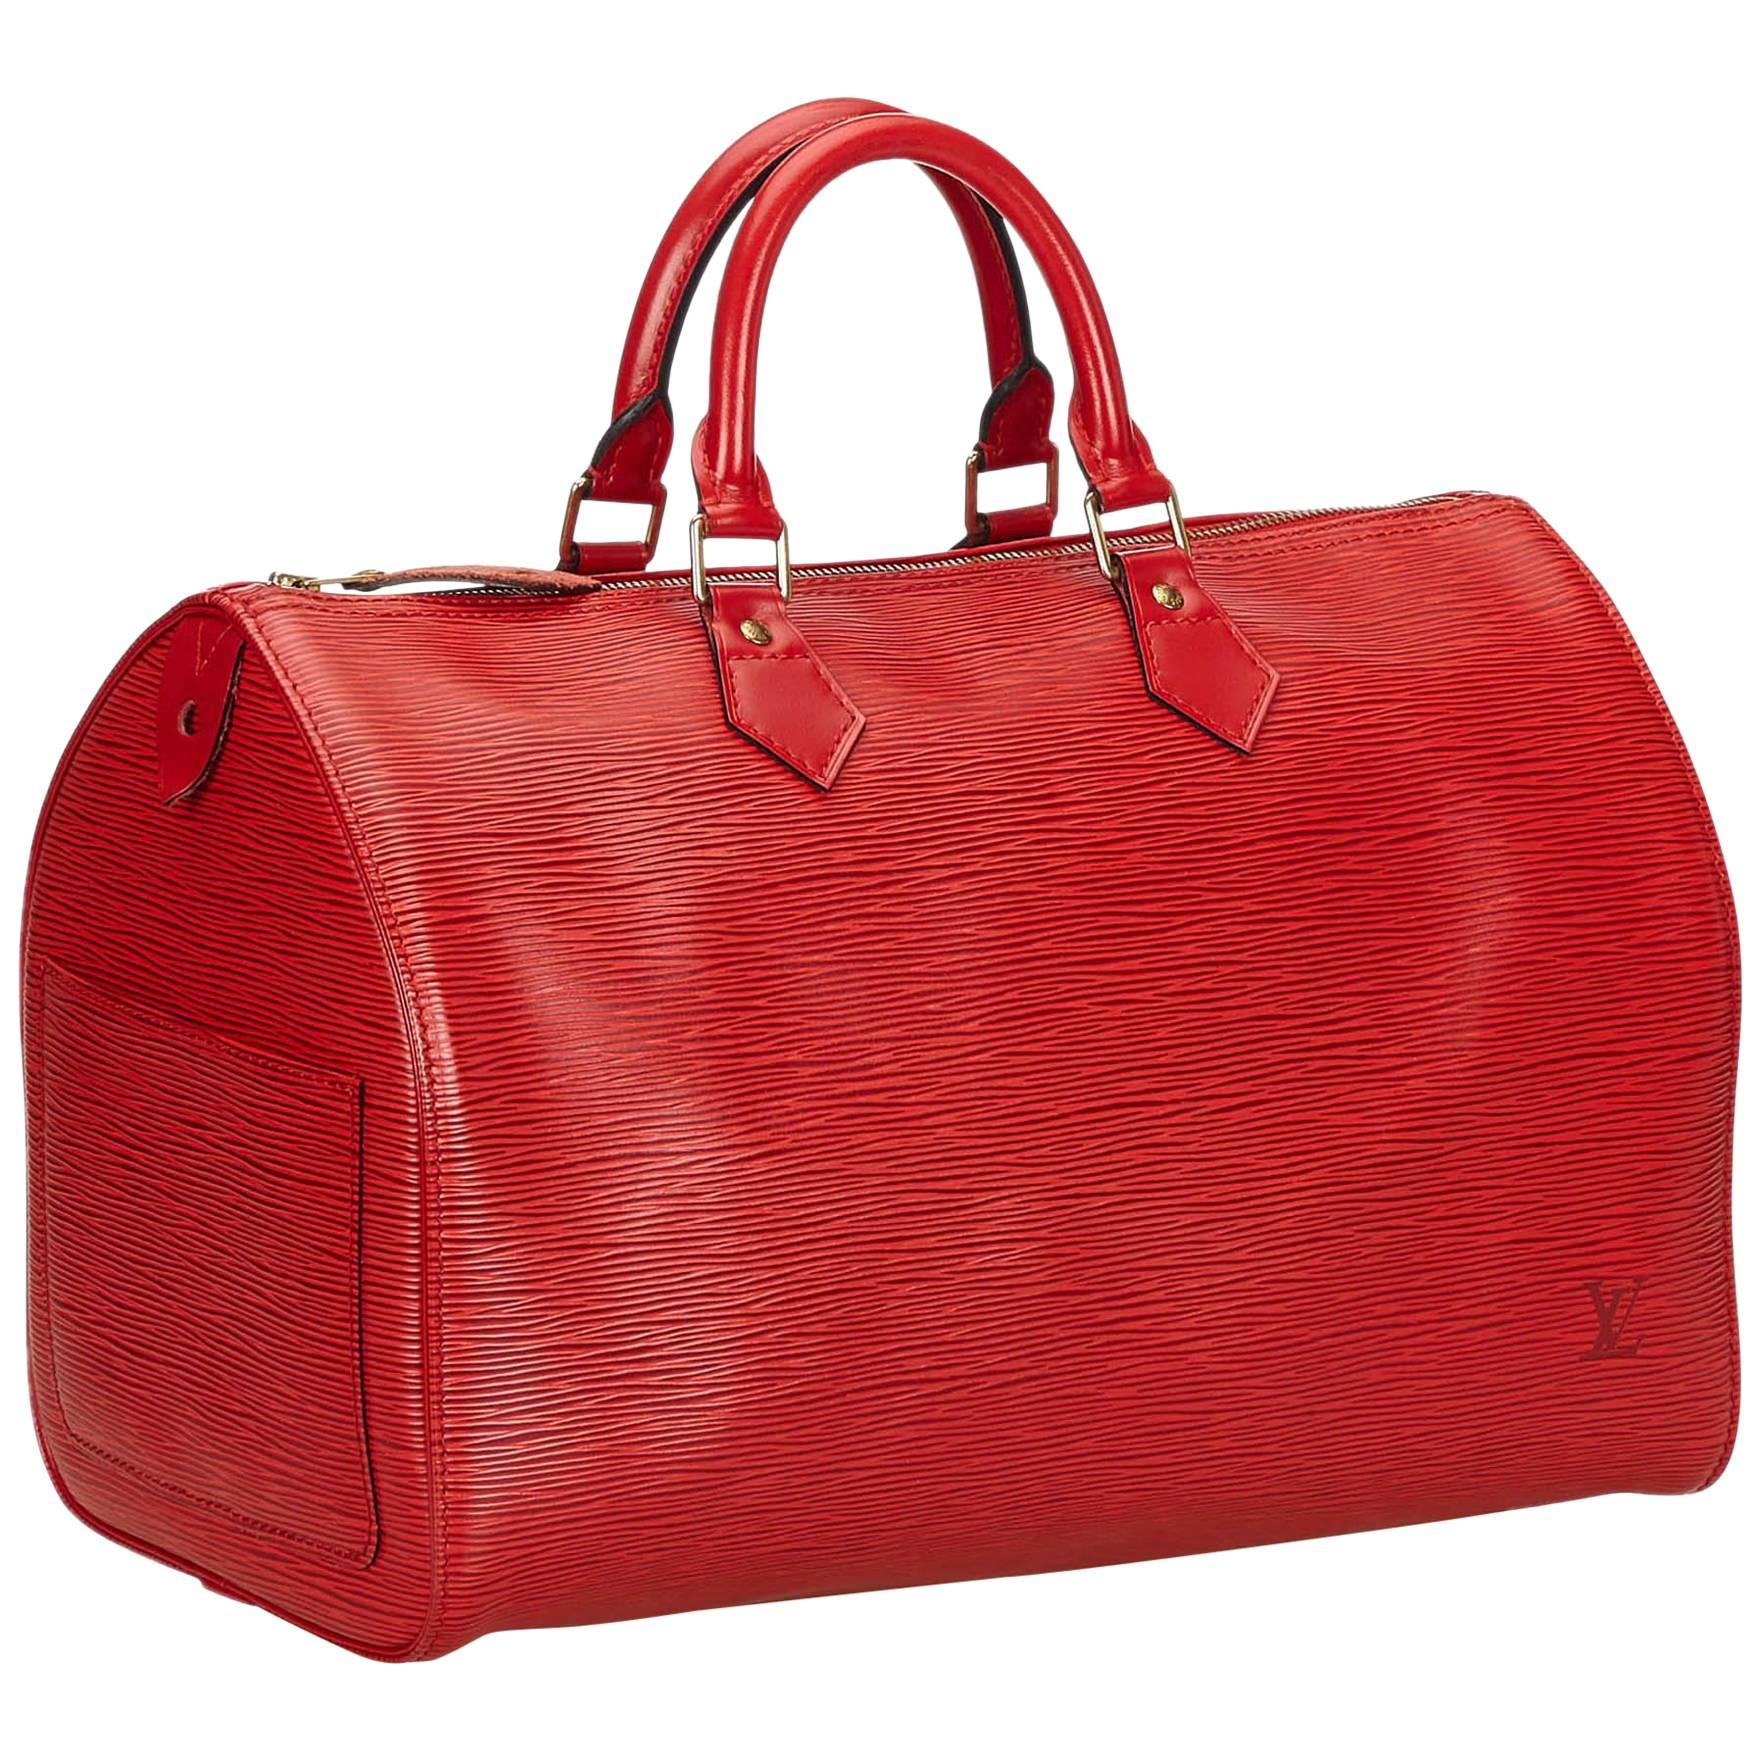 Louis Vuitton Red Epi Speedy 35 Handbag